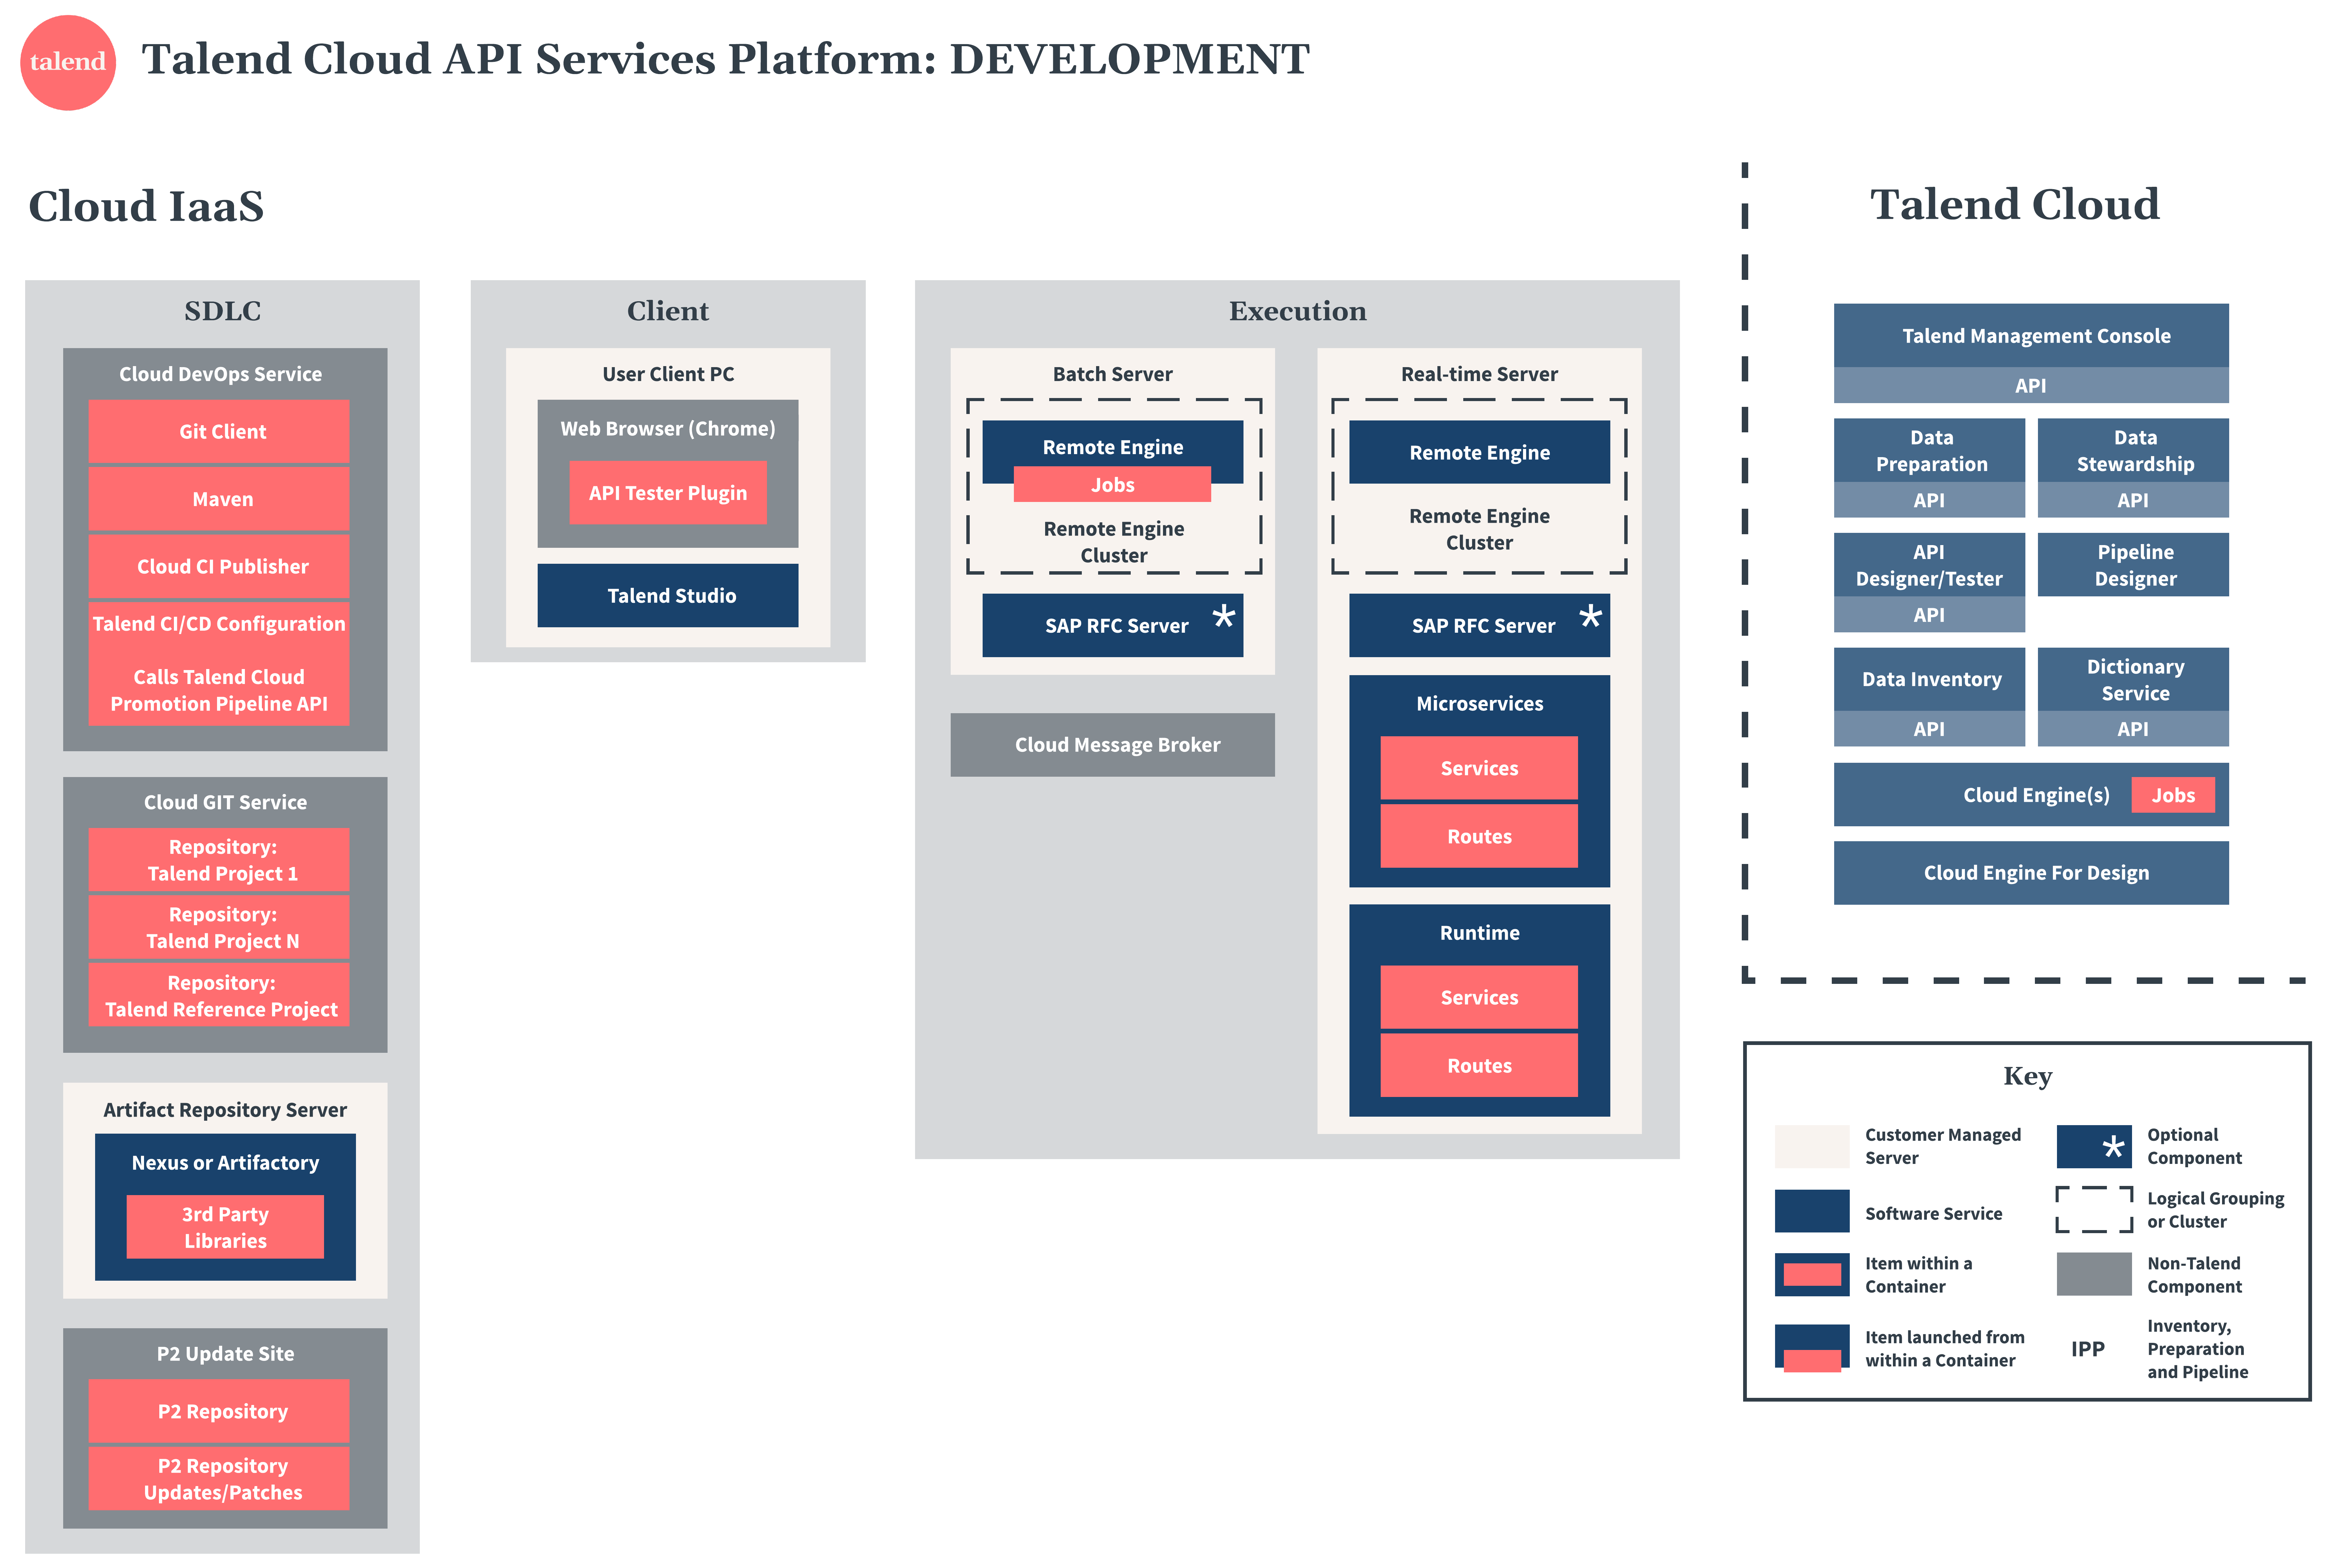 Talend Cloud API Services Platform development diagram.